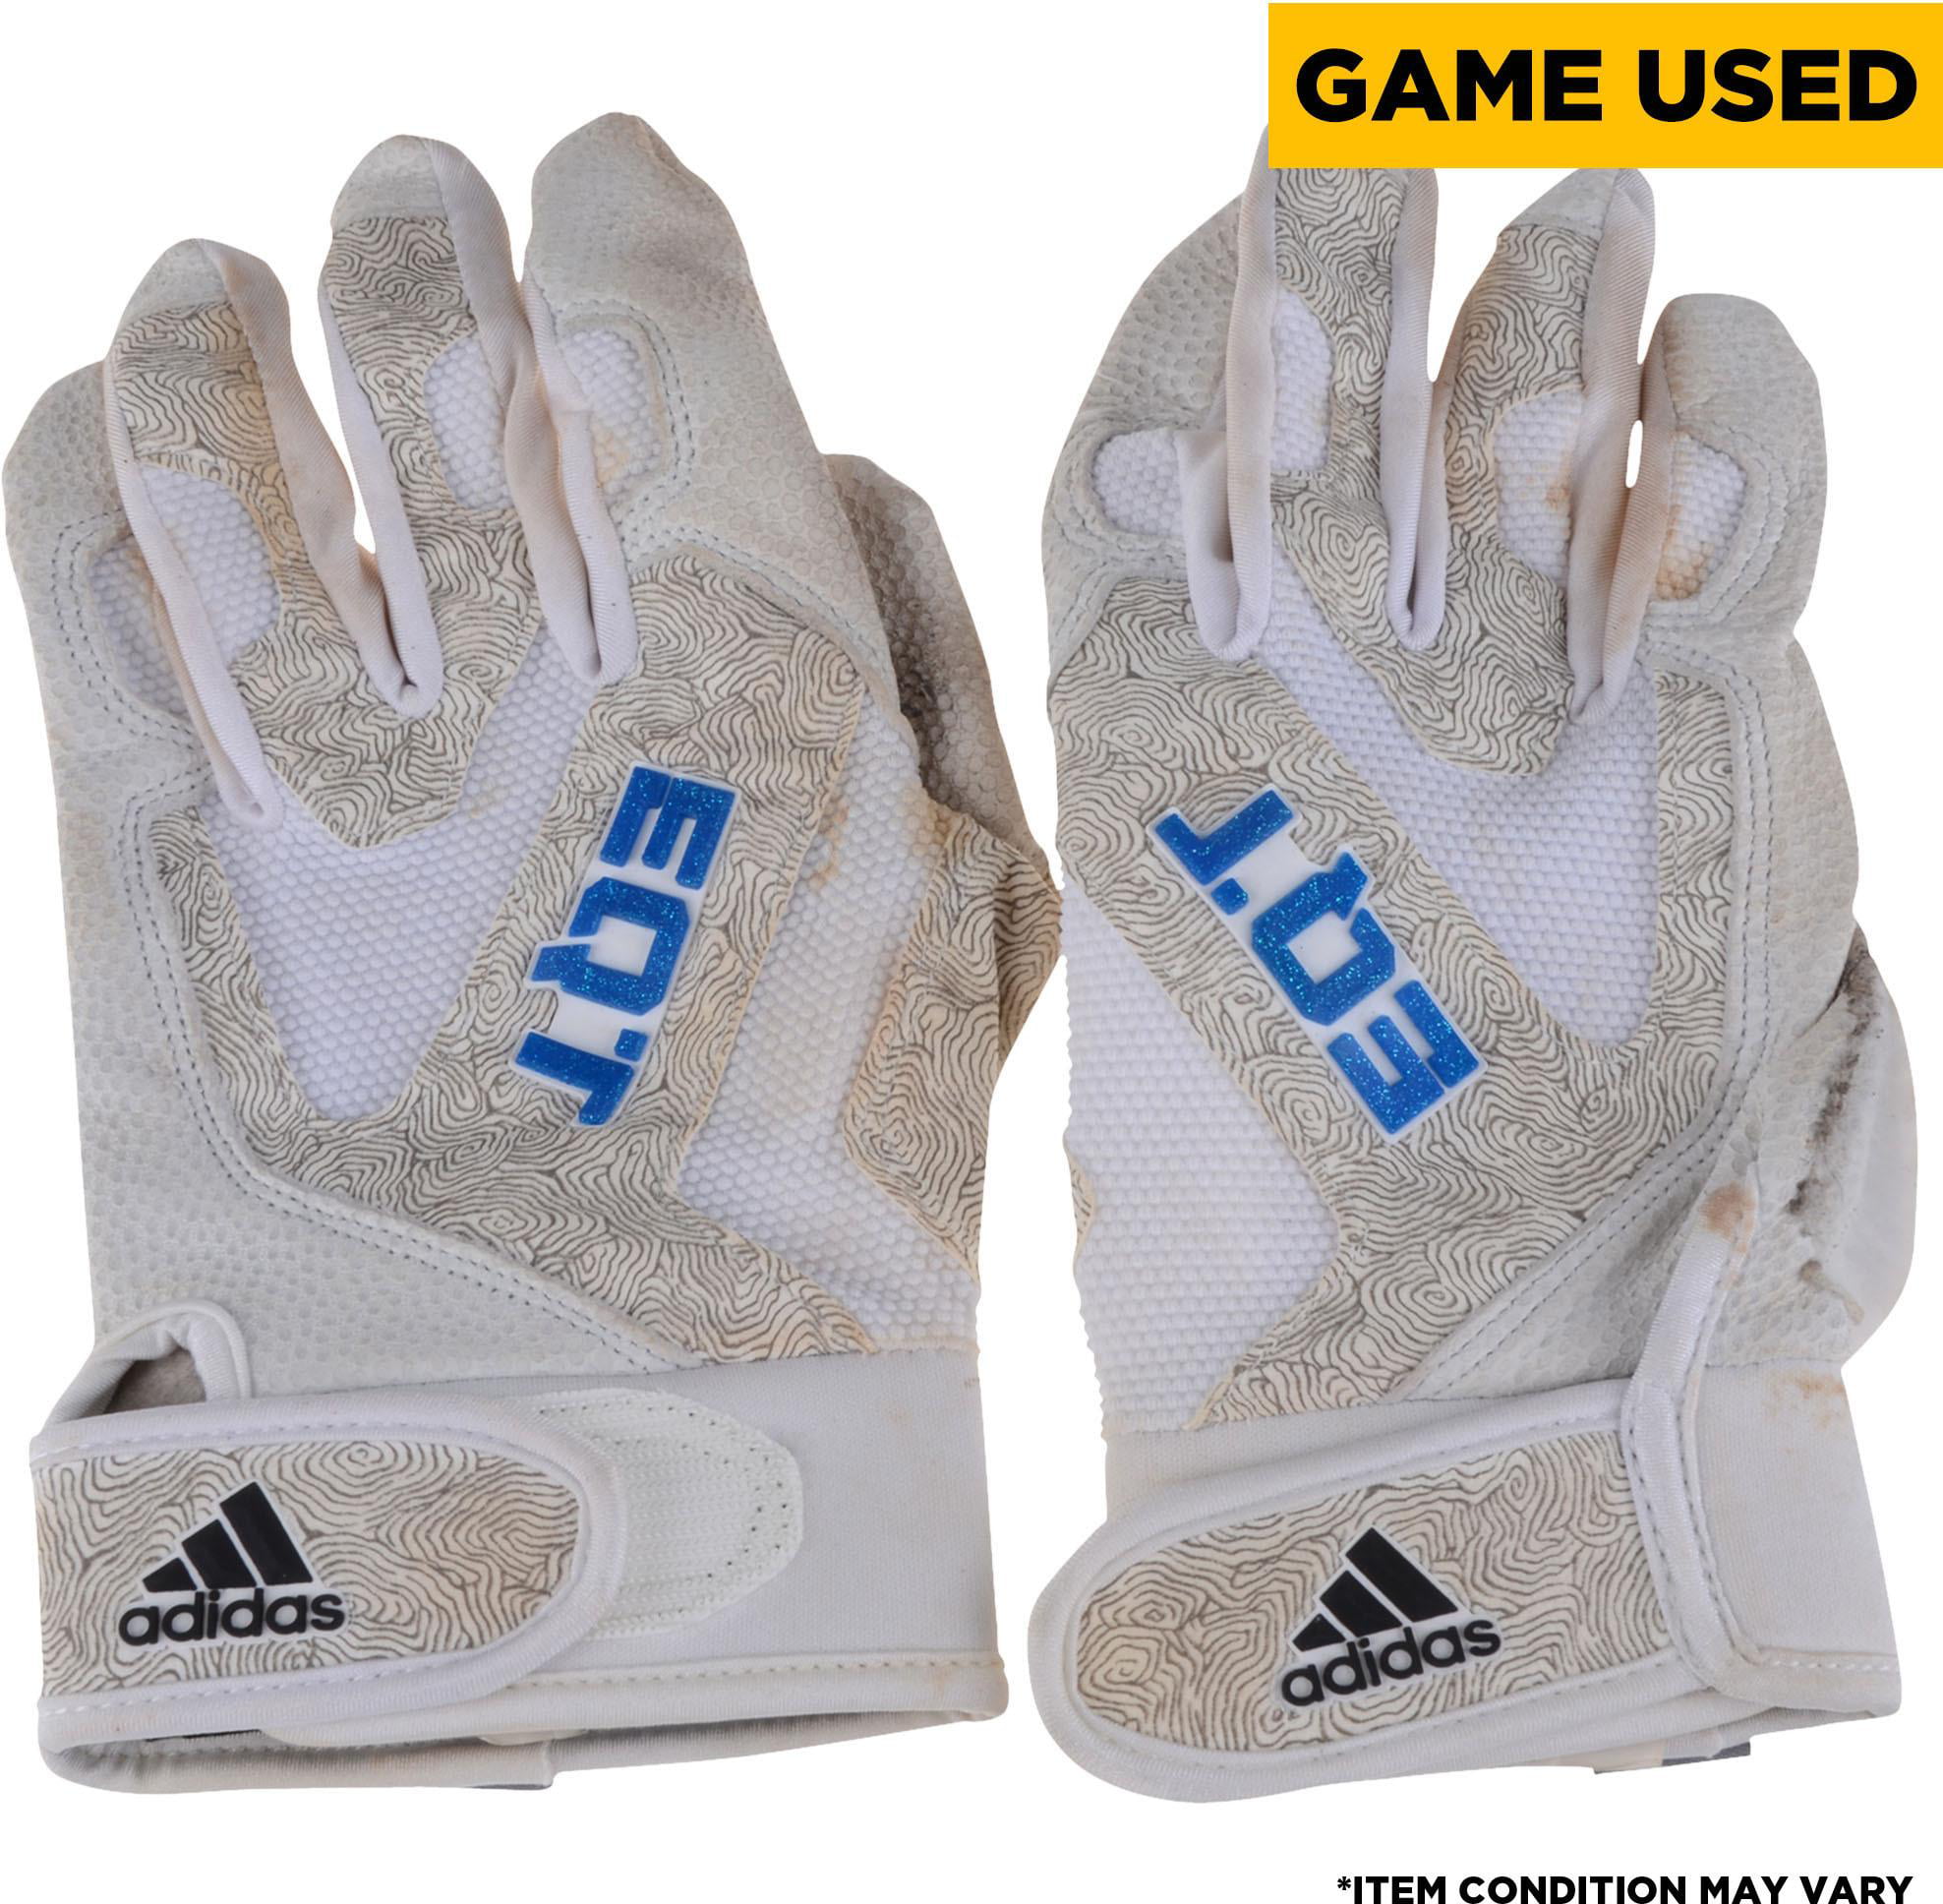 adidas eqt batting gloves